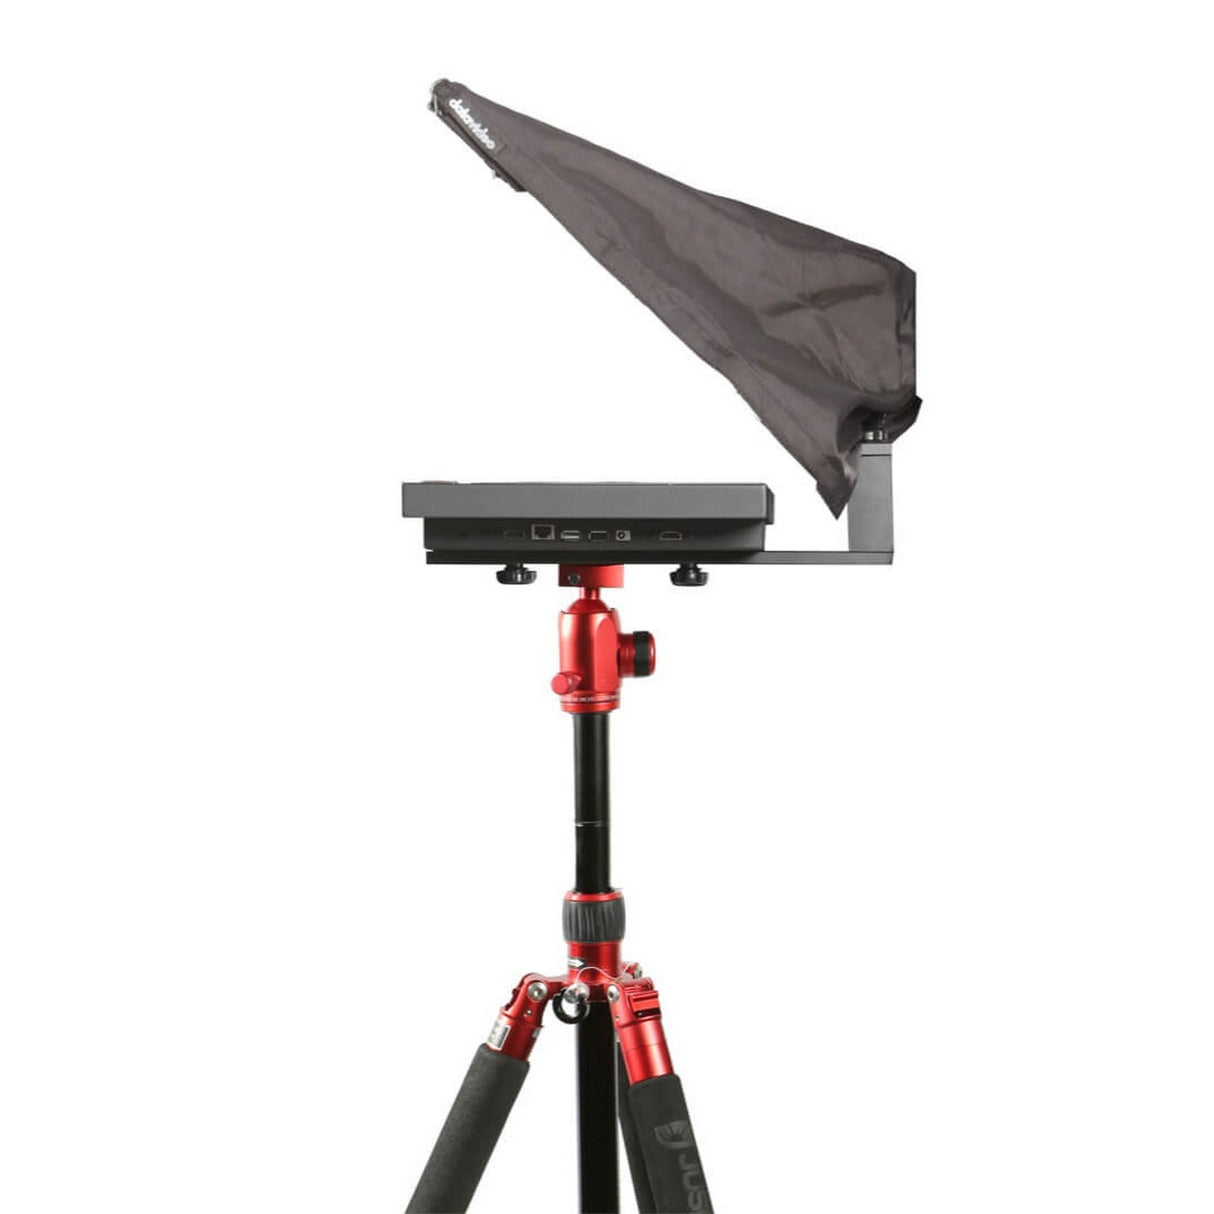 Datavideo TP-700 Large Screen Prompter Kit for ENG Cameras